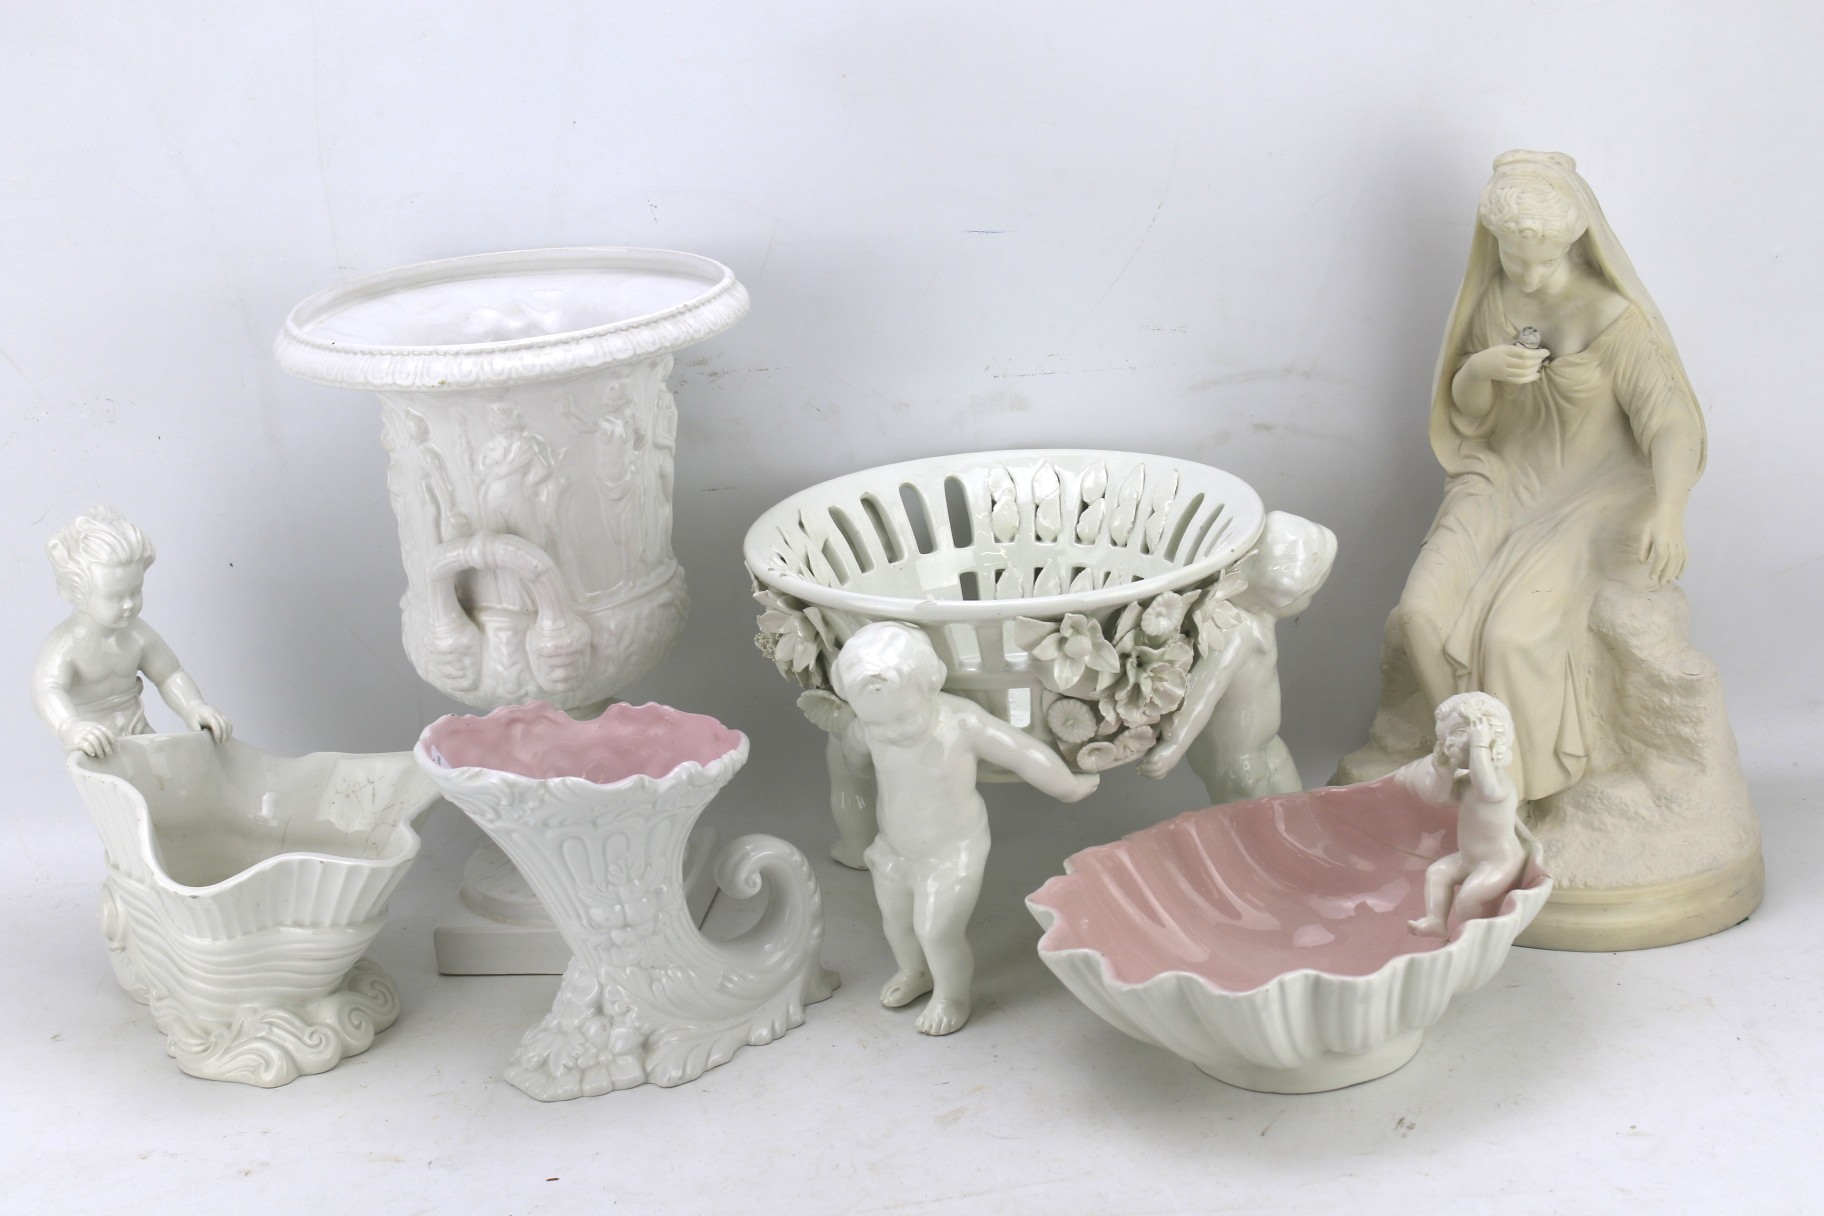 Five items of Blanc-de-chine type ceramics.